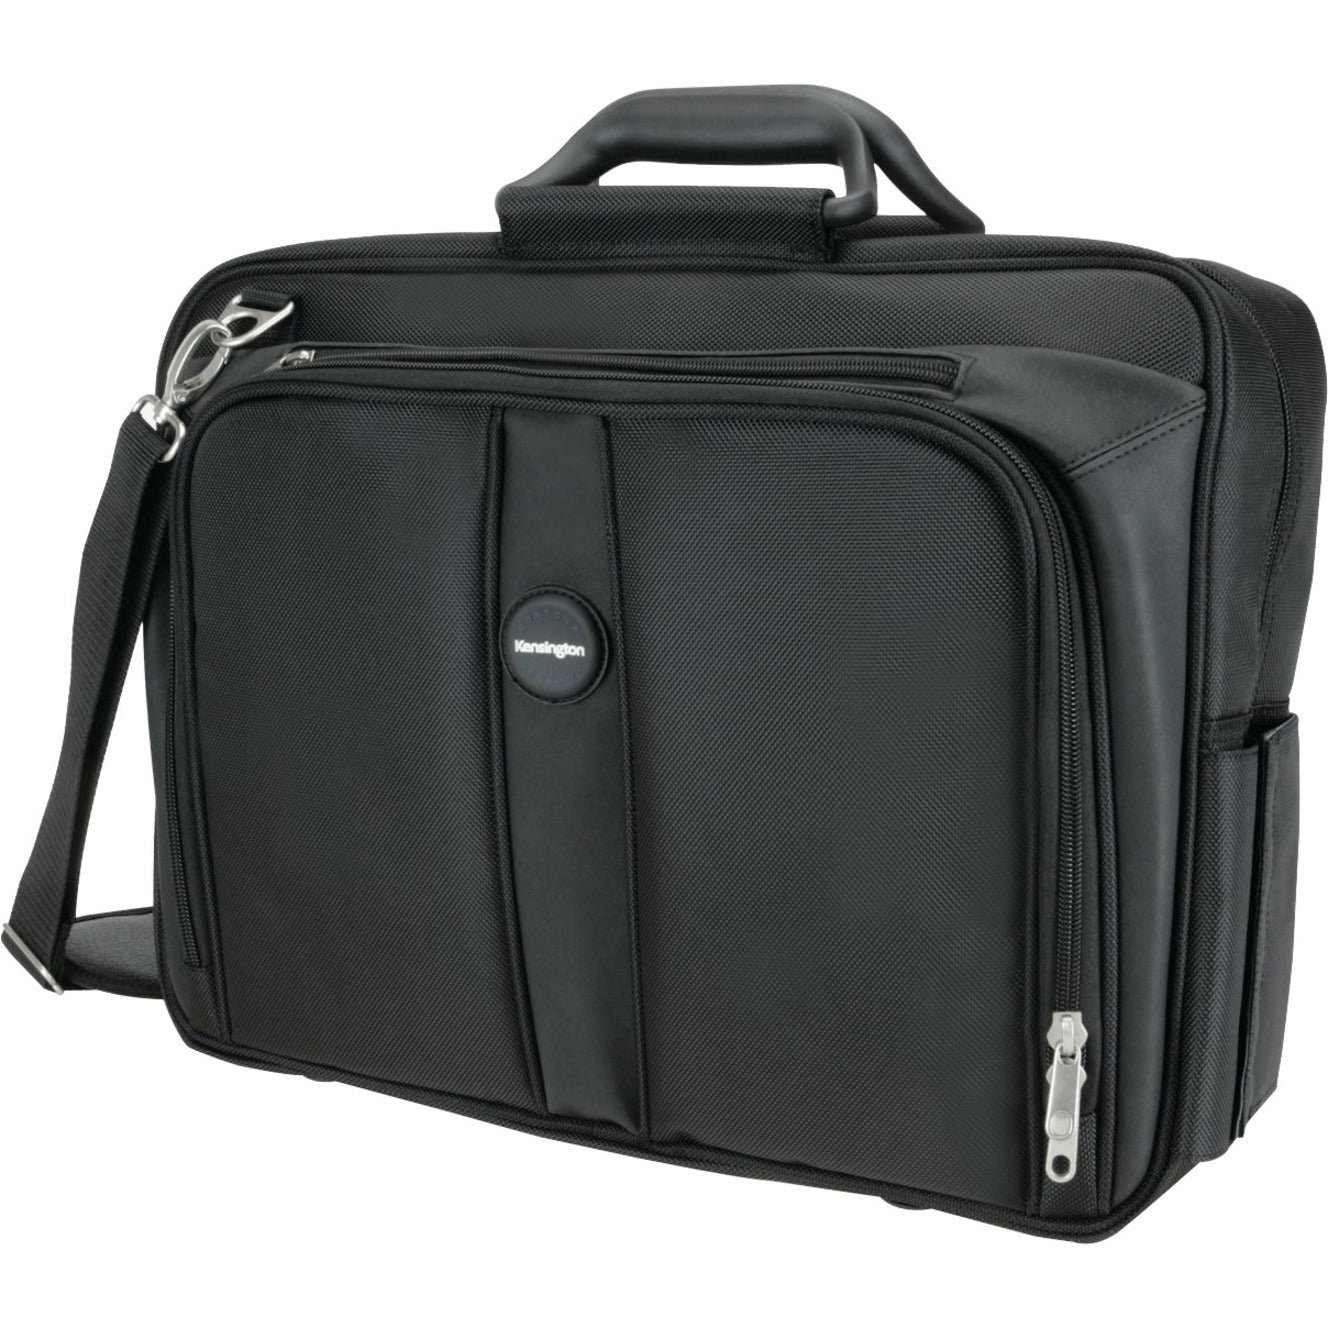 Kensington K62340D Contour Pro 17" Notebook Carrying Case, Black, Puncture Resistant, Shock Absorbing Shoulder Strap